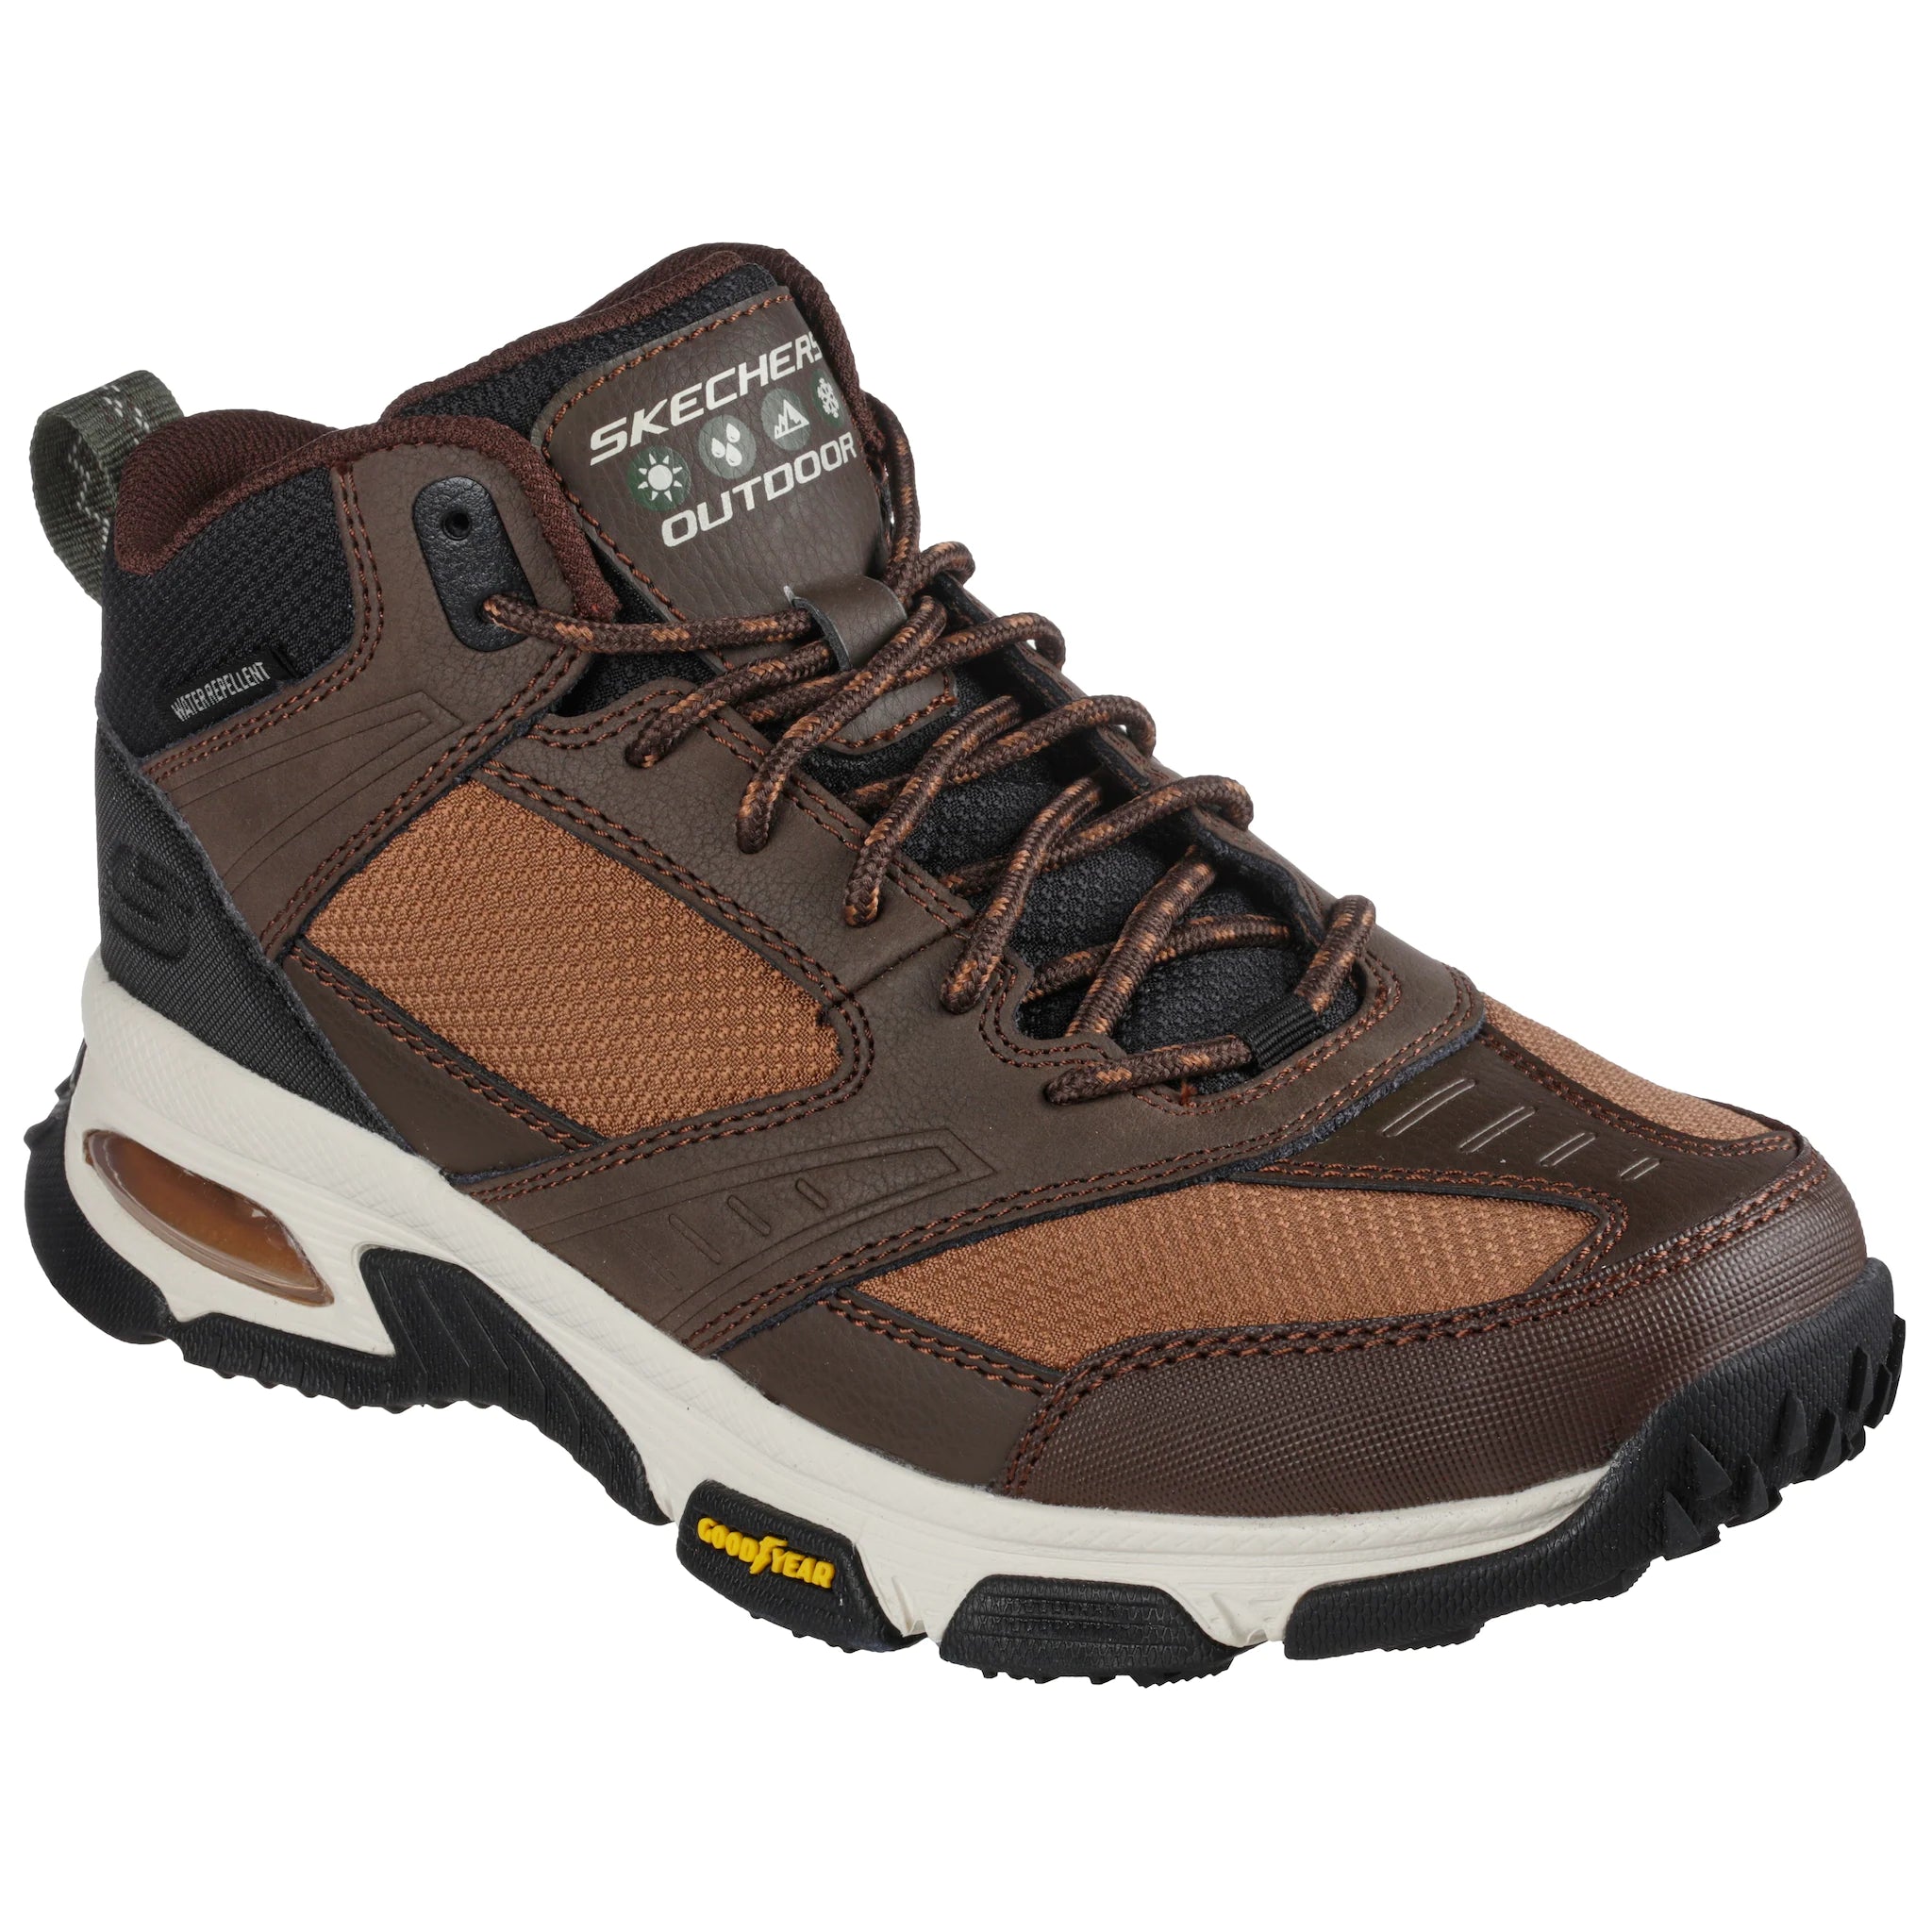 Bulldozer - shoe&amp;me - Skechers - Boot - Boots, Mens, Winter